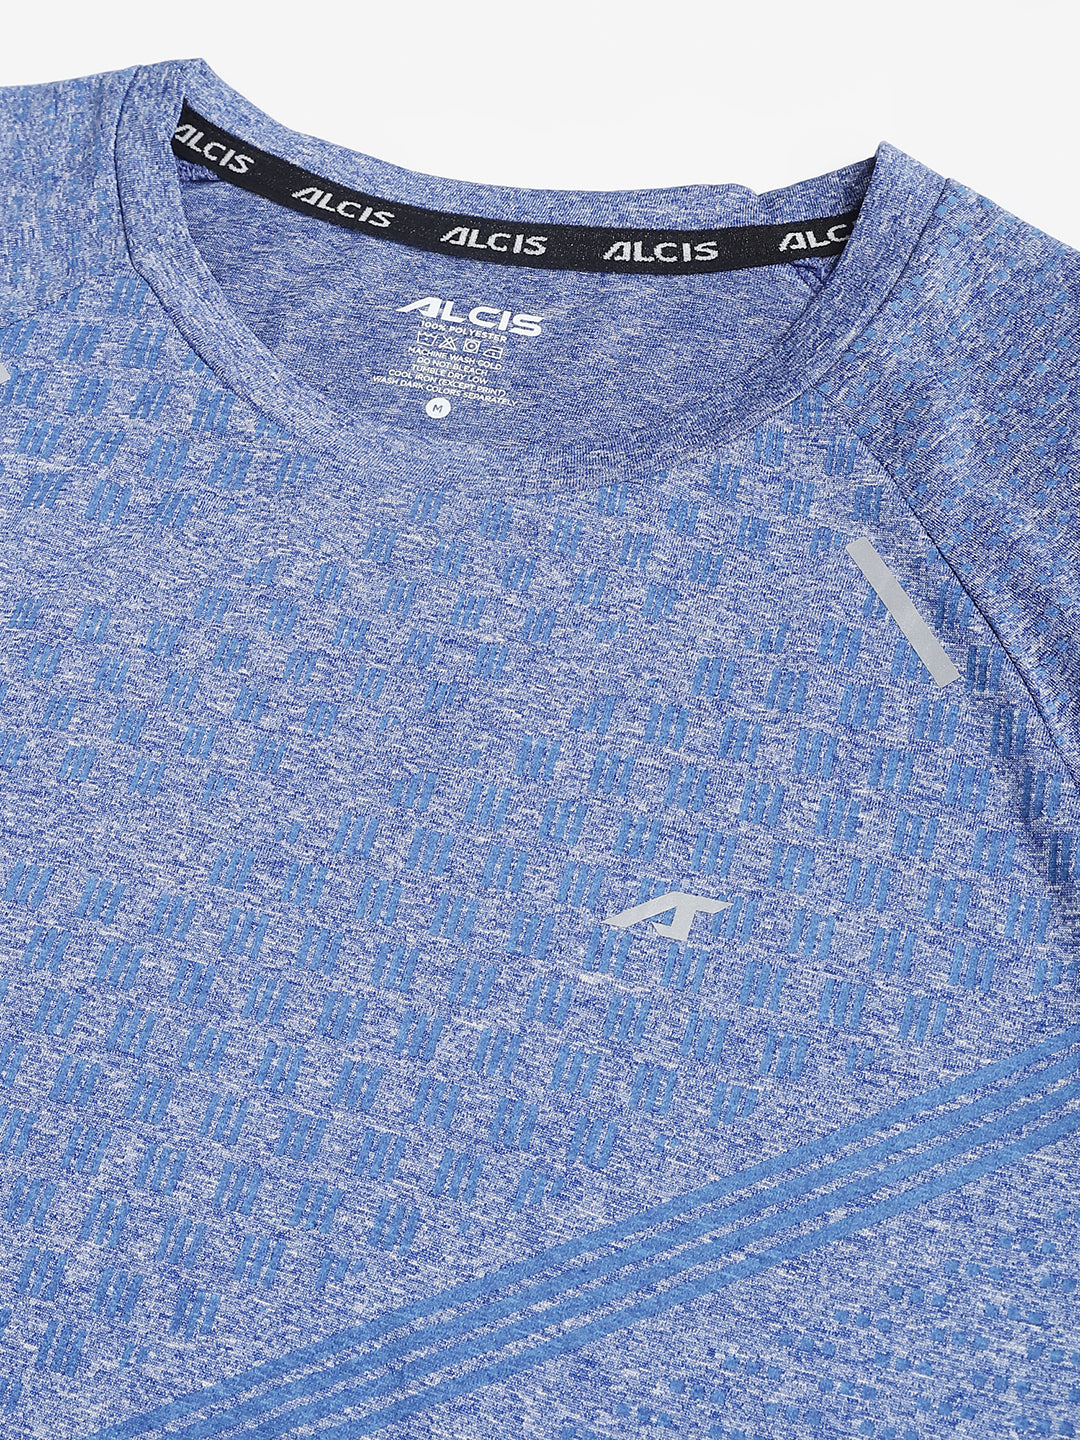 Alcis Men Blue Heather Anti-Static Slim-Fit Round Neck Distance Running T-Shirt